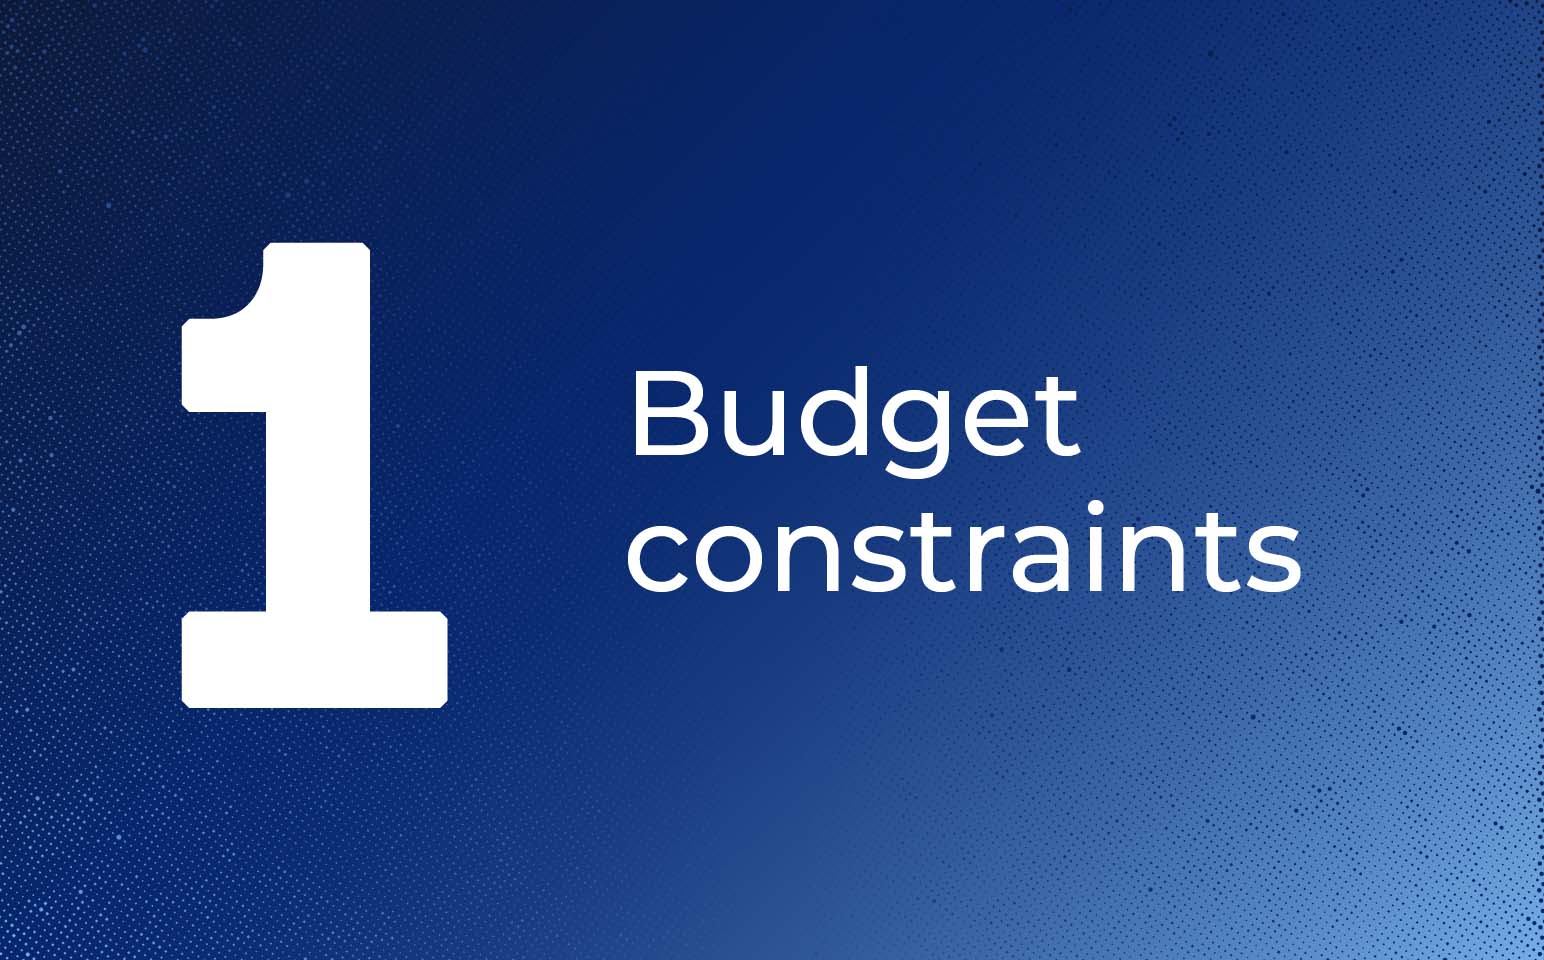 Challenge 1 – Budget constraints